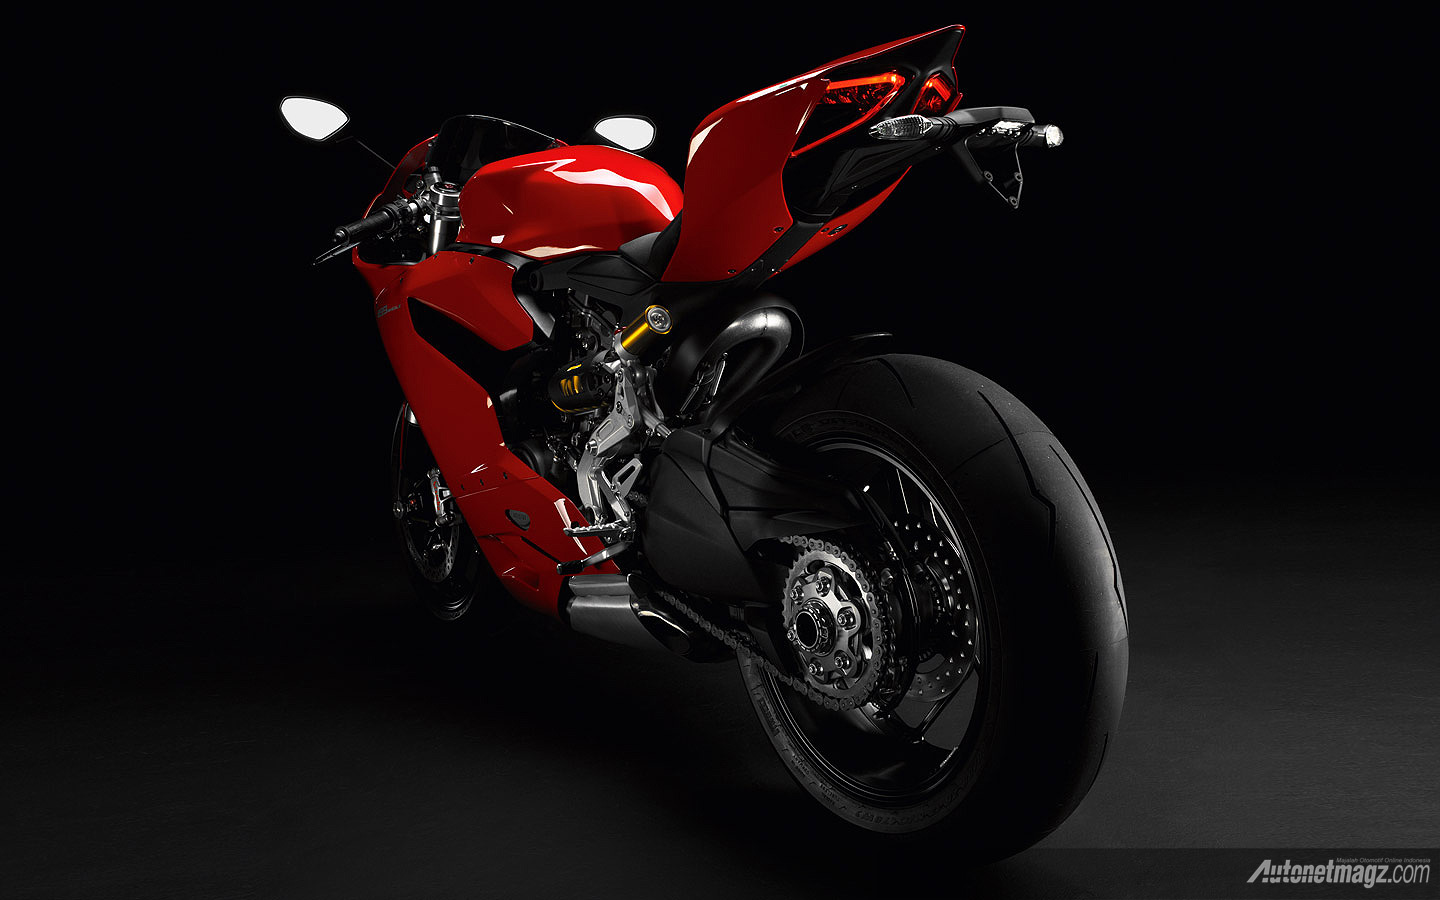 Ducati, Ducati Panigale 1199 ABS Ducati Indonesia: Ducati Special Promo Ramadhan Dengan Bunga 0% Selama 3 Tahun